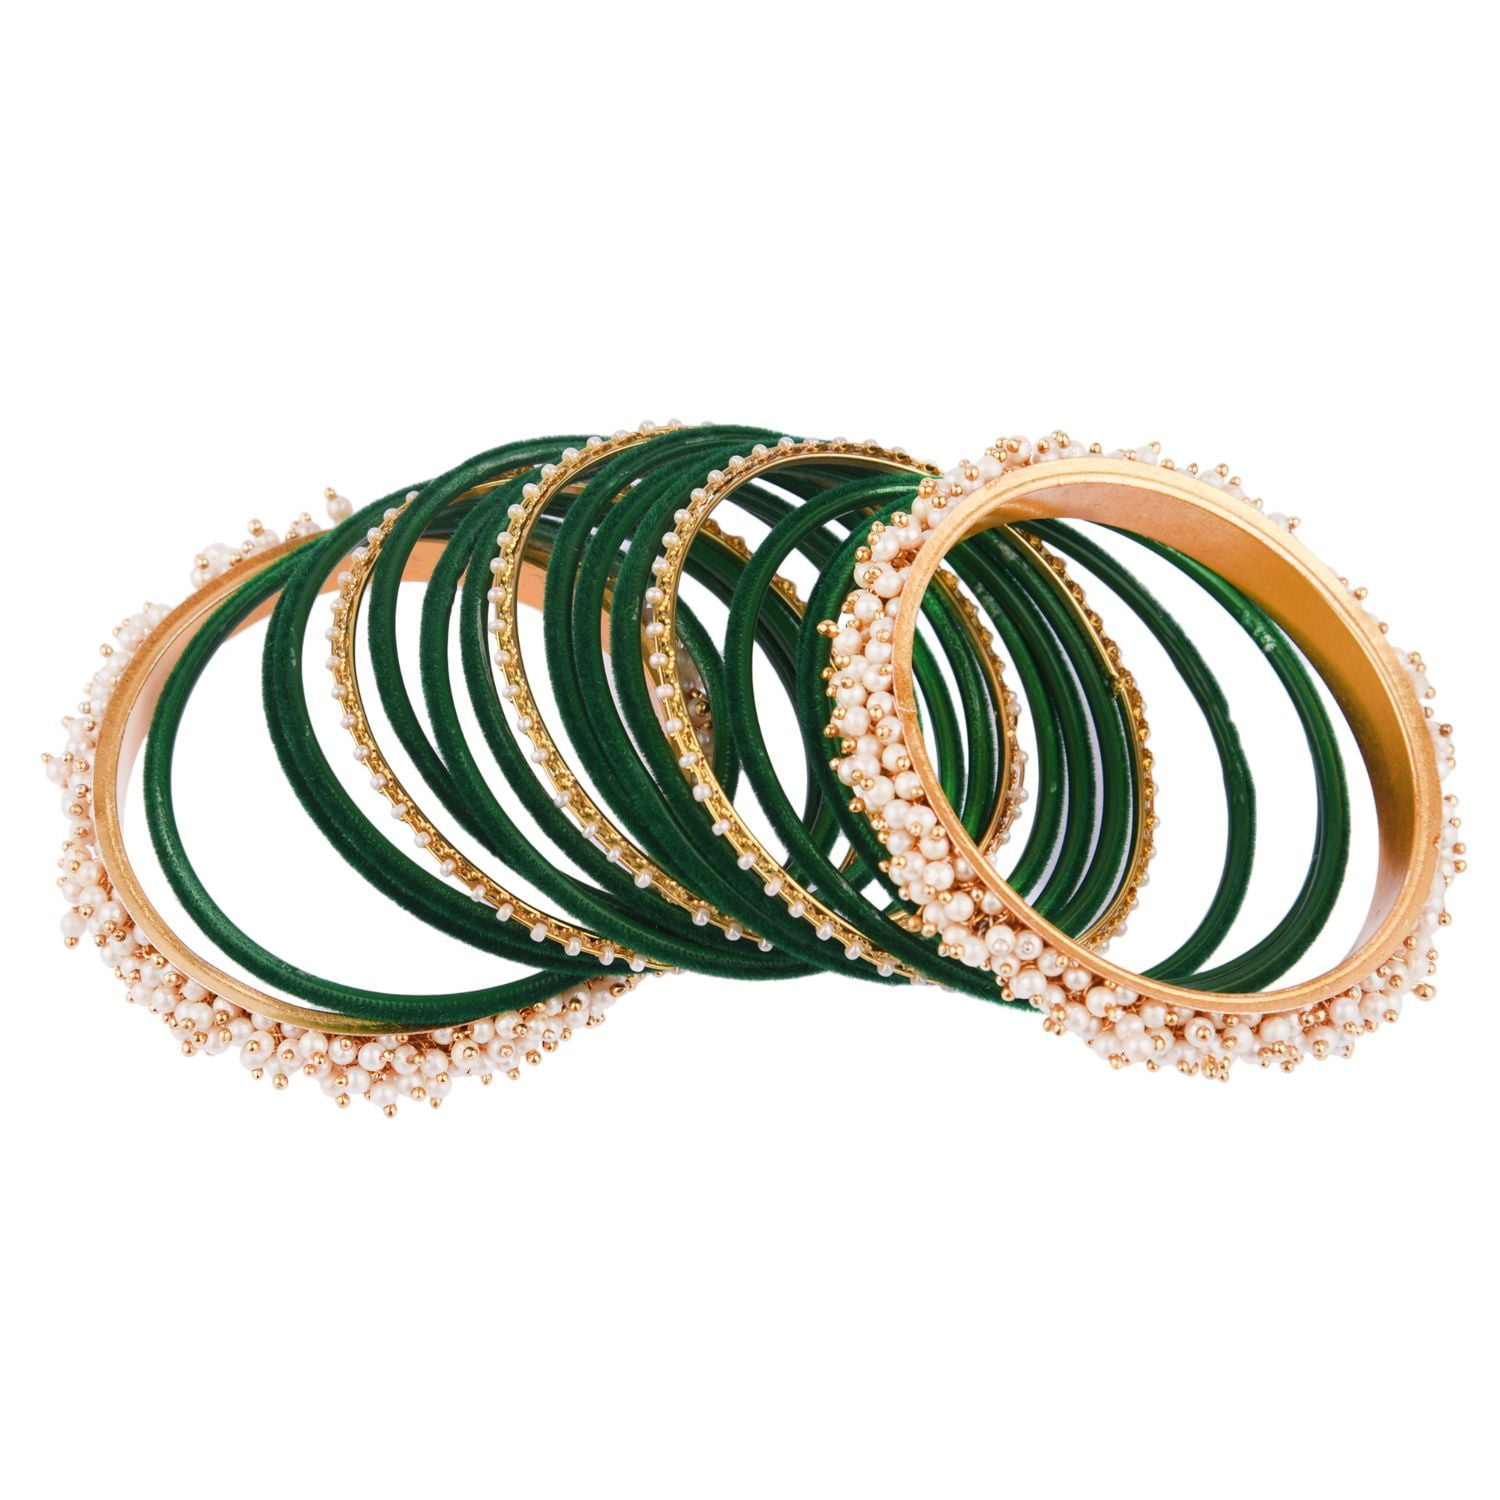 Buy Gold Bangles Design Set Bangles Indian Imitation Jewelry for Women